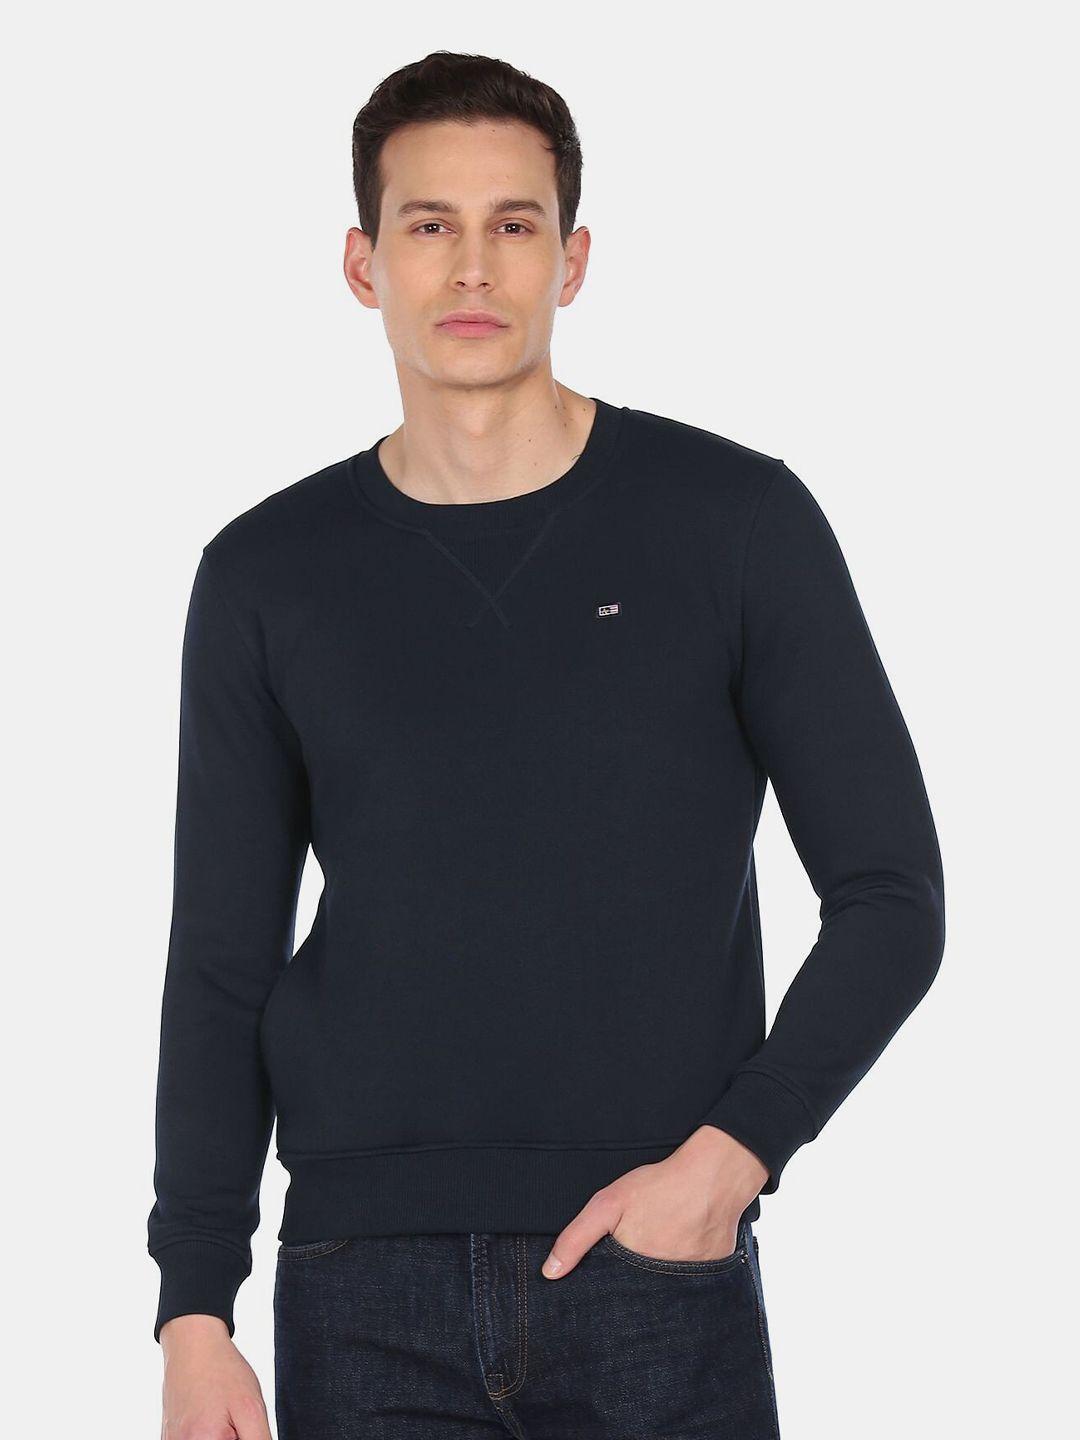 arrow-sport-men-navy-blue-casual-sweatshirt